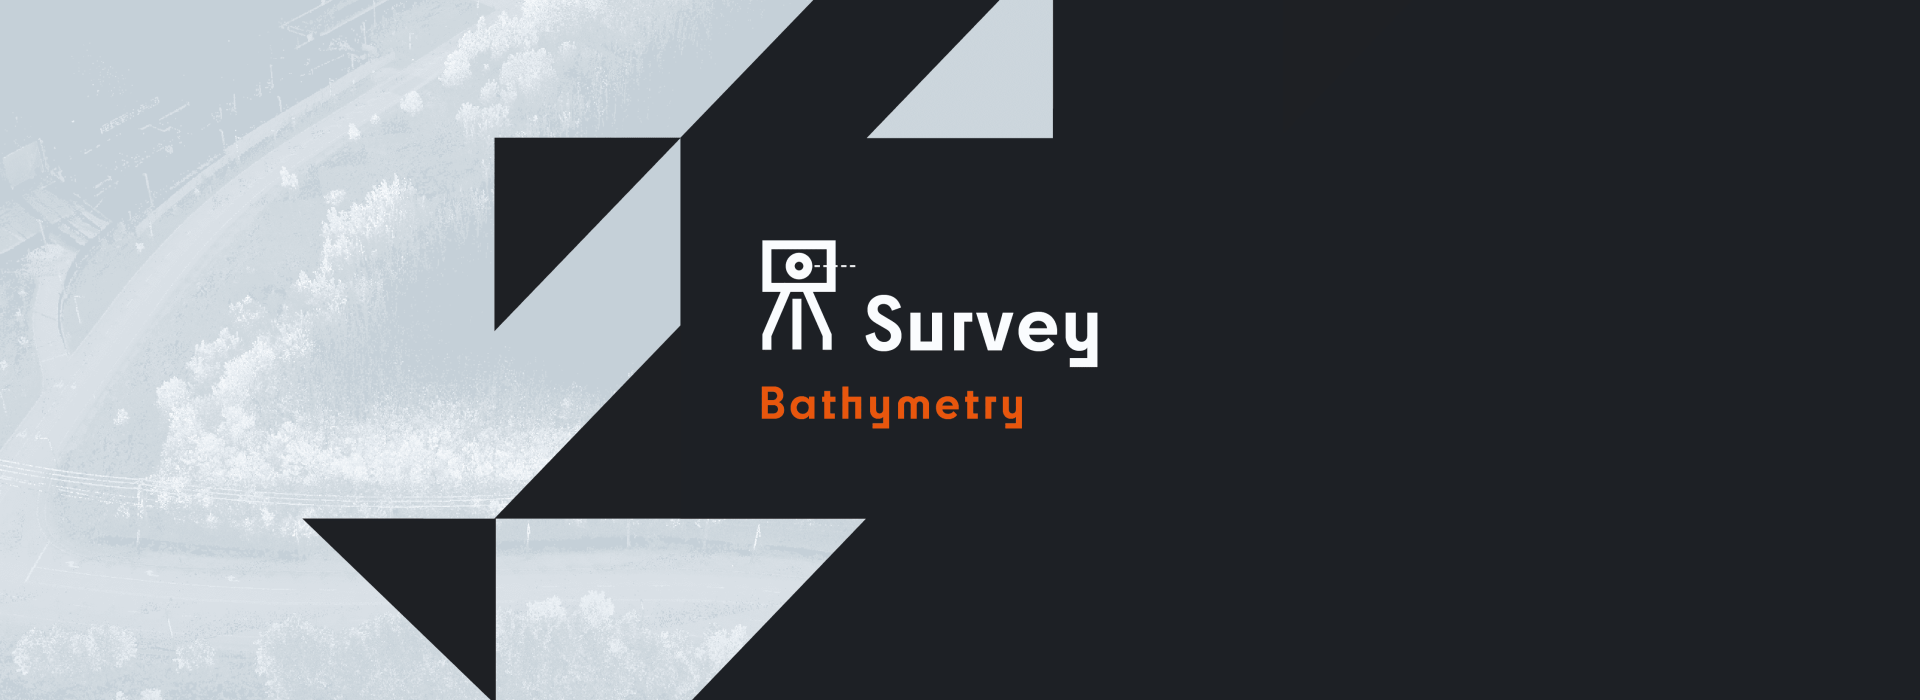 ANGLAIS_WebBanner_Survey - Bathymetry